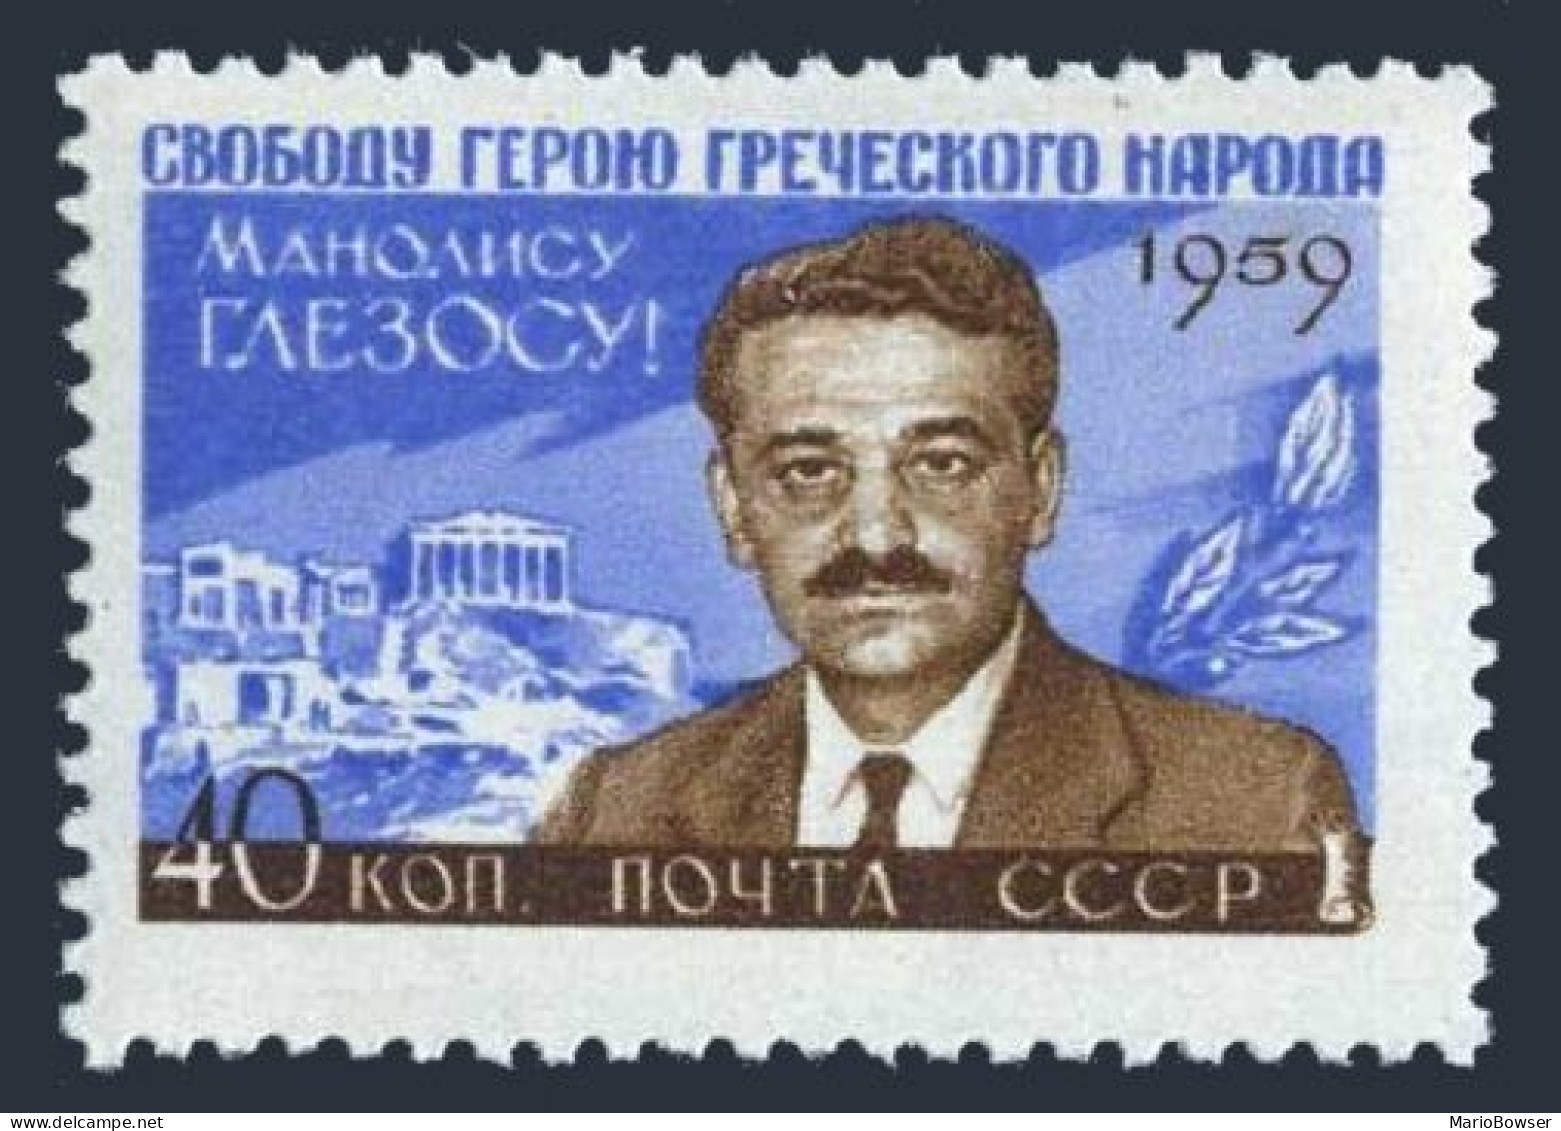 Russia 2270,MNH.Michel 2288. Manolis Glezos,Greek Communist.Acropolis,1959. - Nuevos